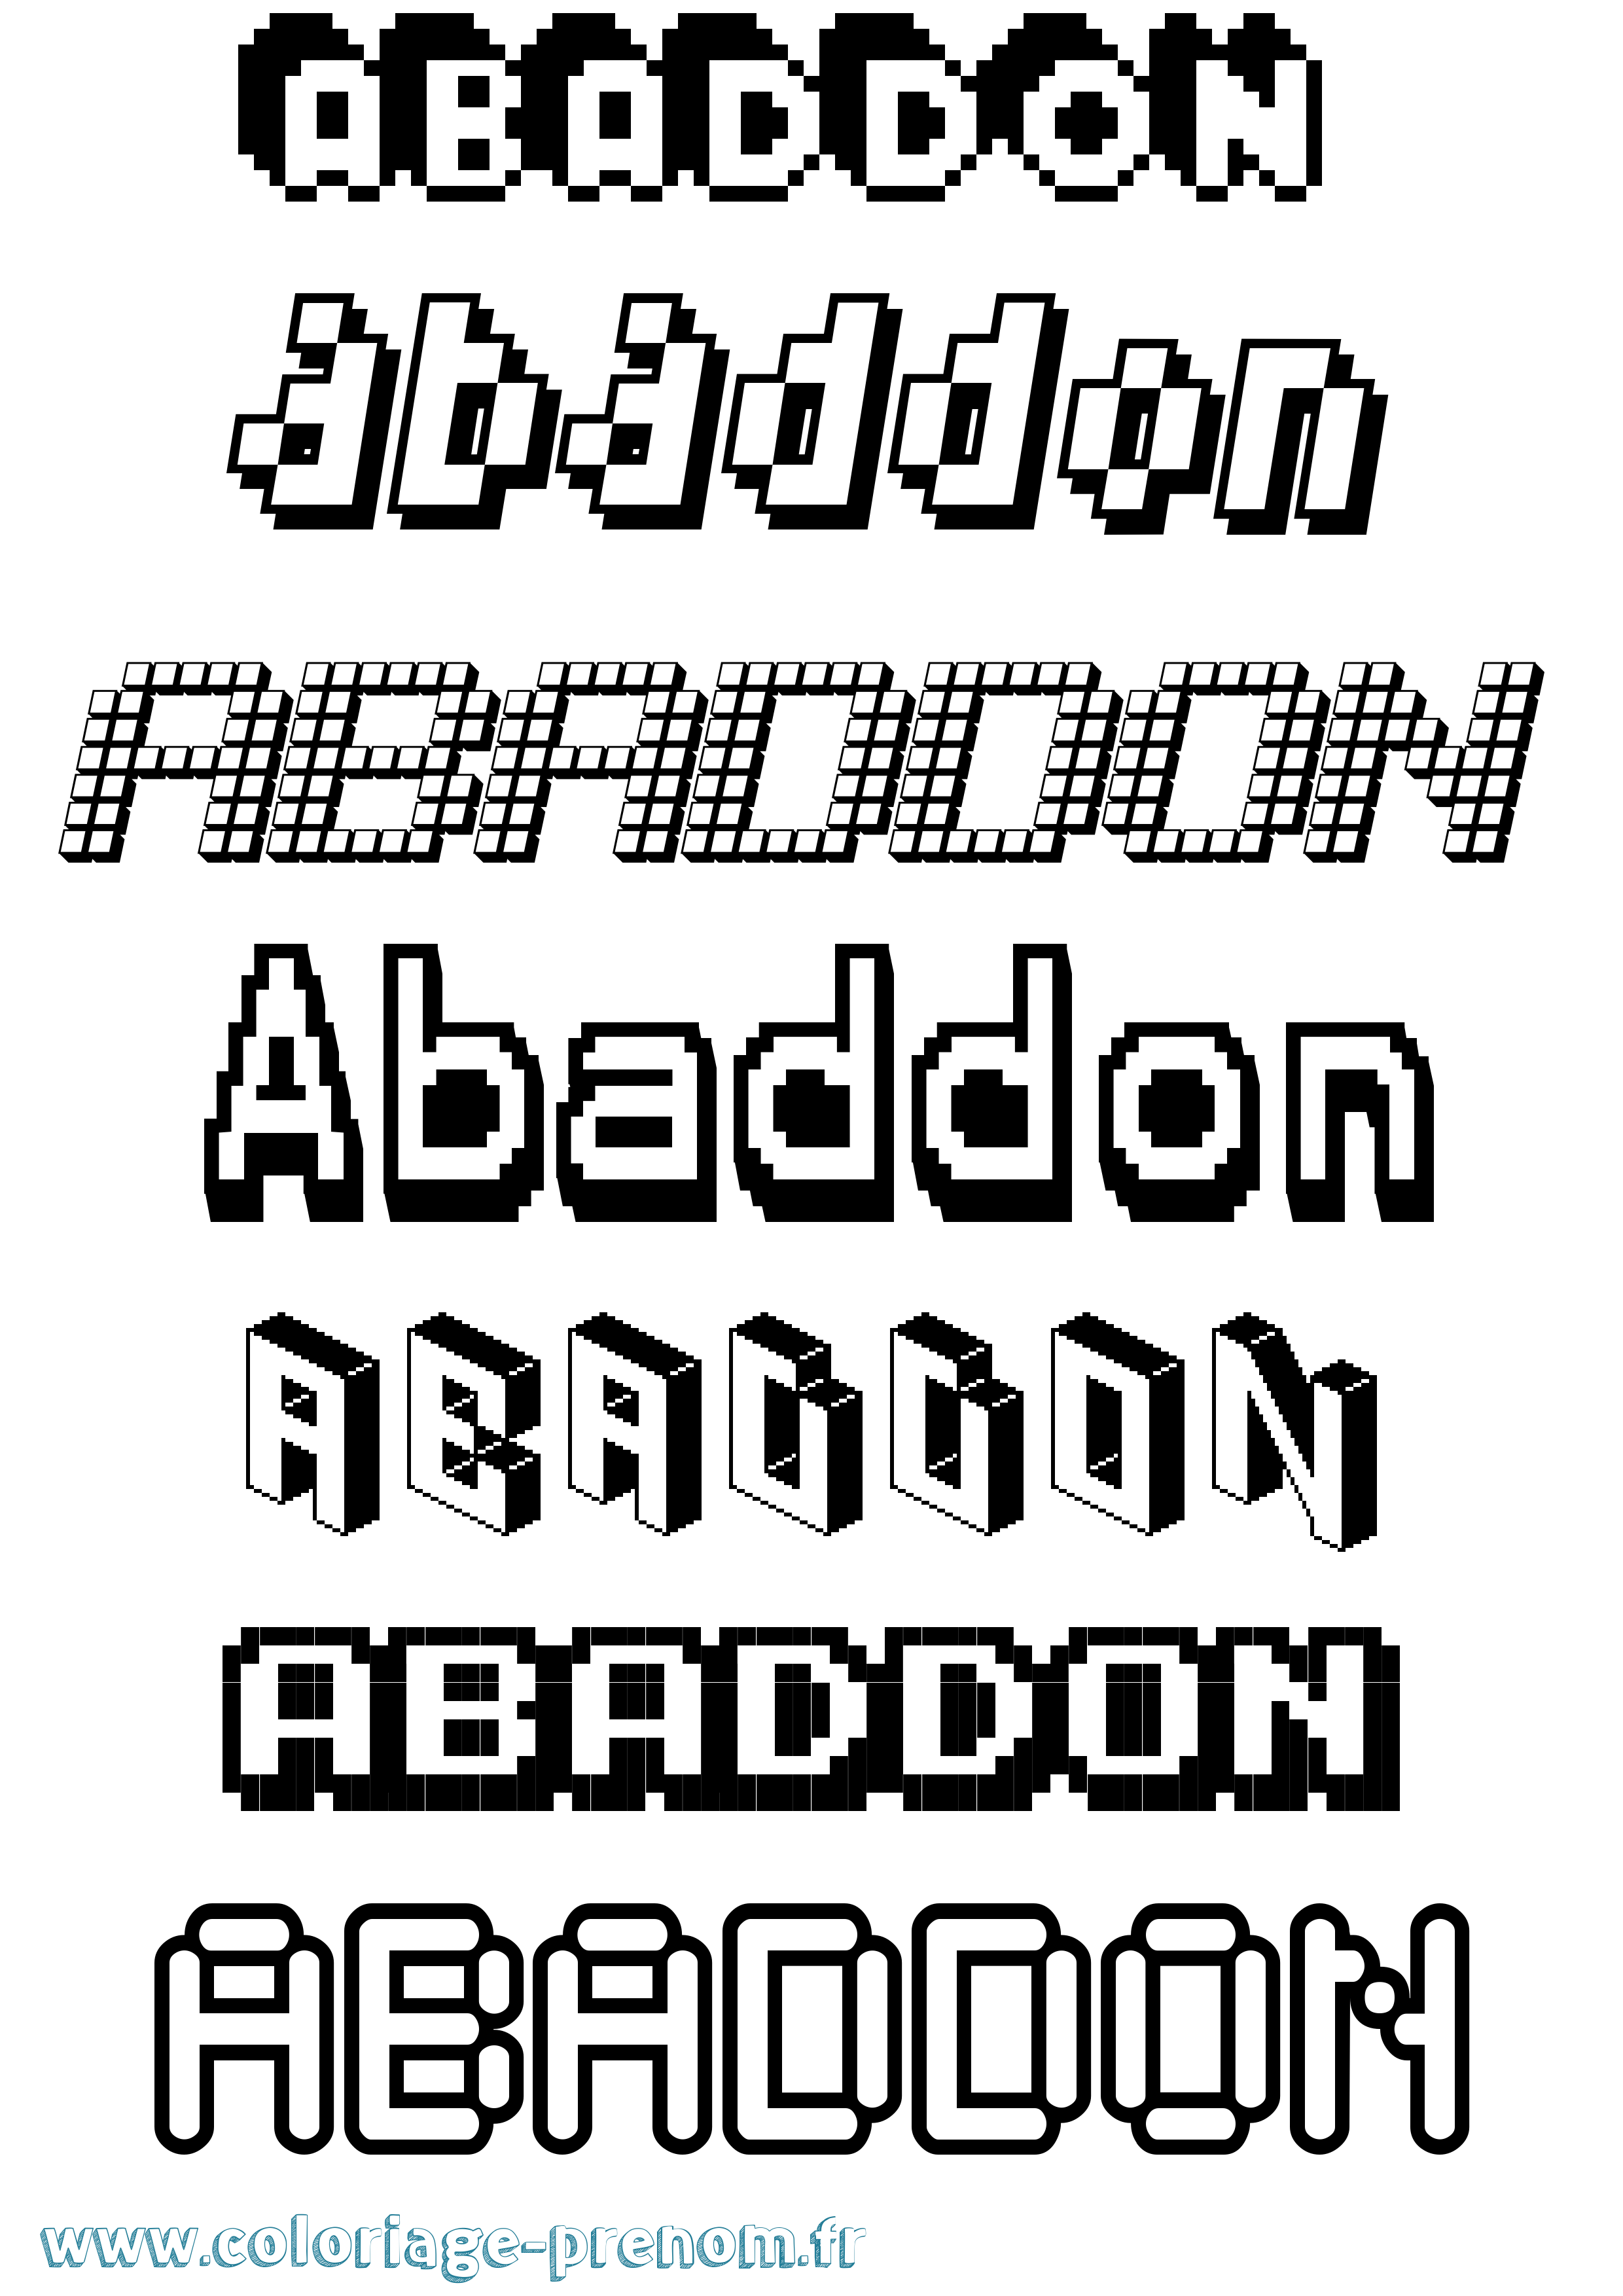 Coloriage prénom Abaddon Pixel